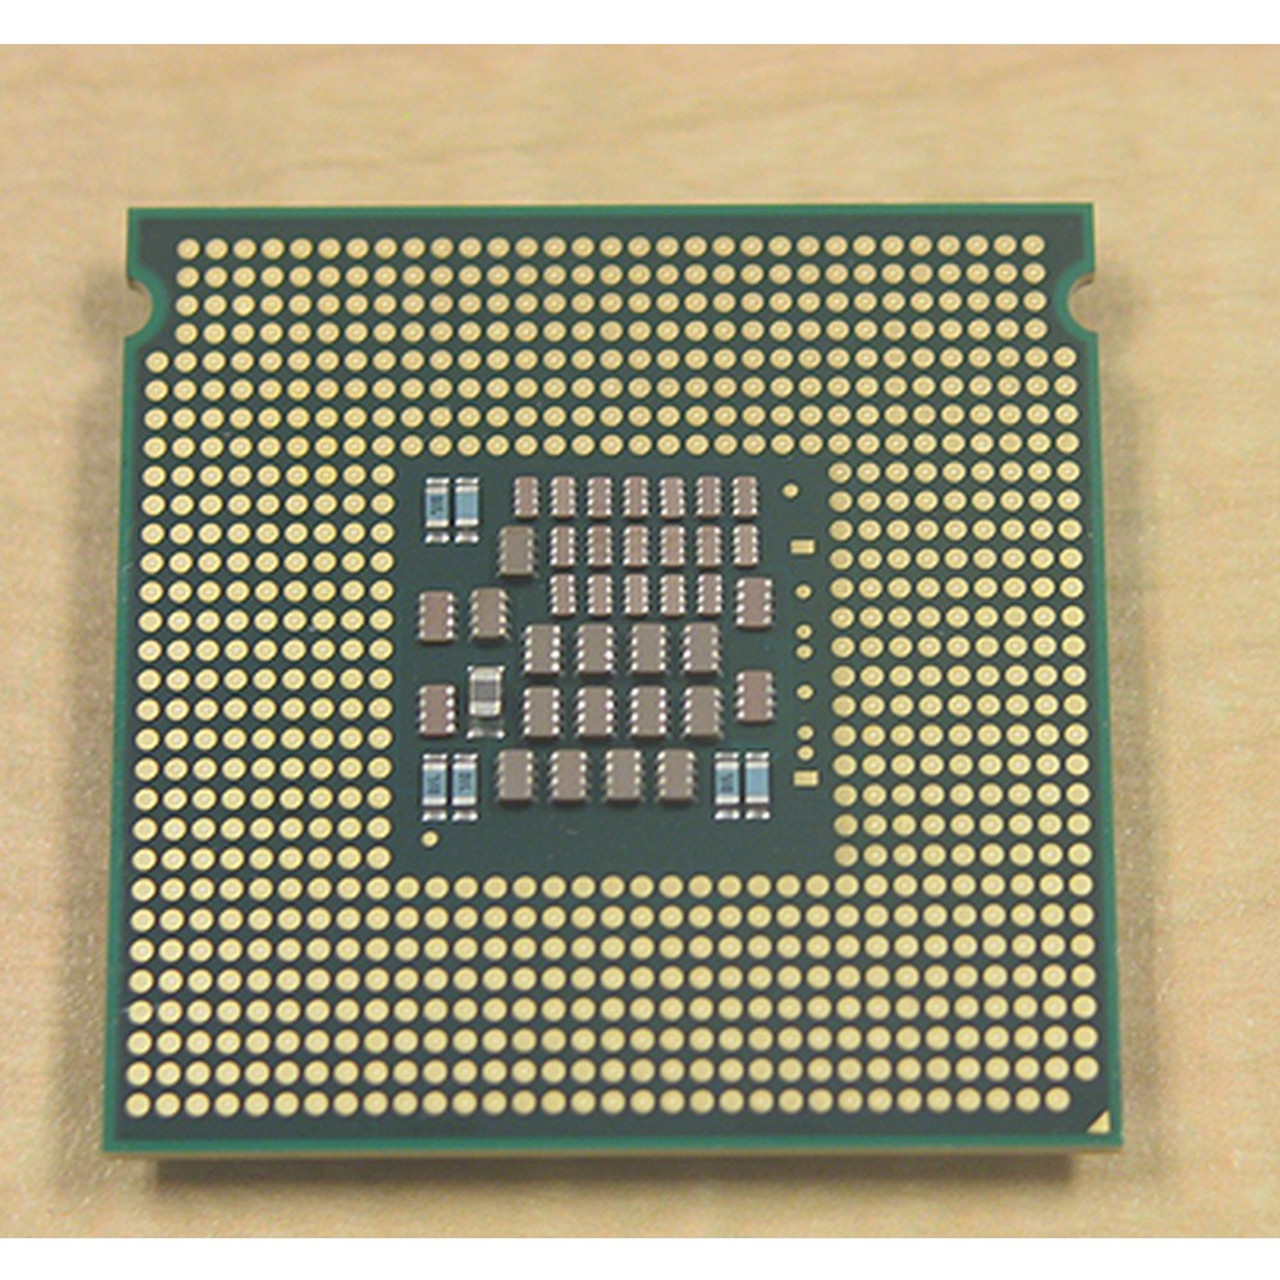 Intel Xeon SLAEM 1.60GHz 8MB 1066MHz FSB Quad-Core E5310 CPU